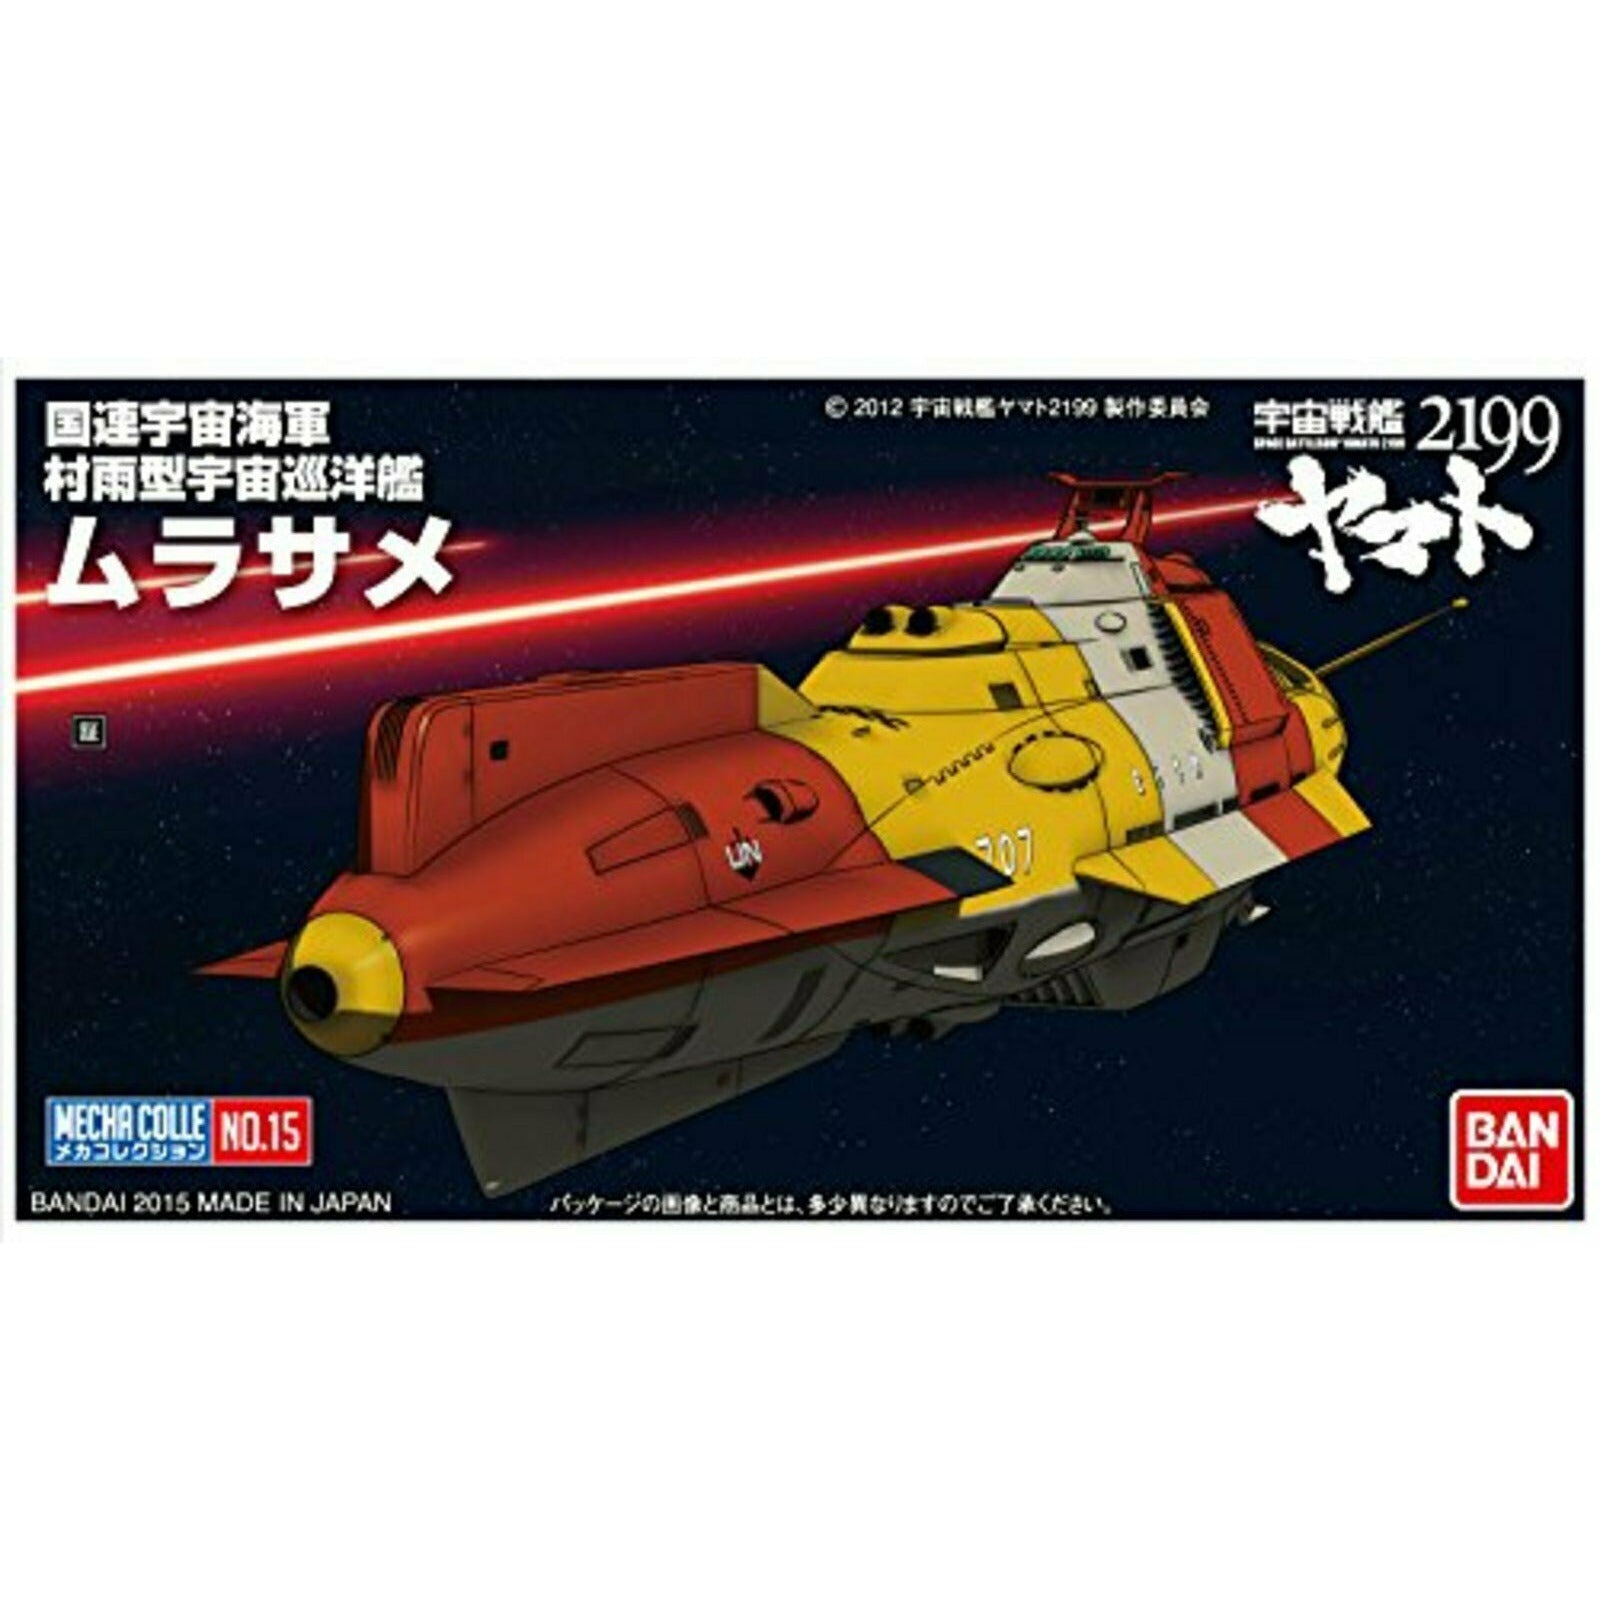 Murasame #15 Star Blazers Mecha Collection #2303292 Space Battleship Yamato 2199 by Bandai